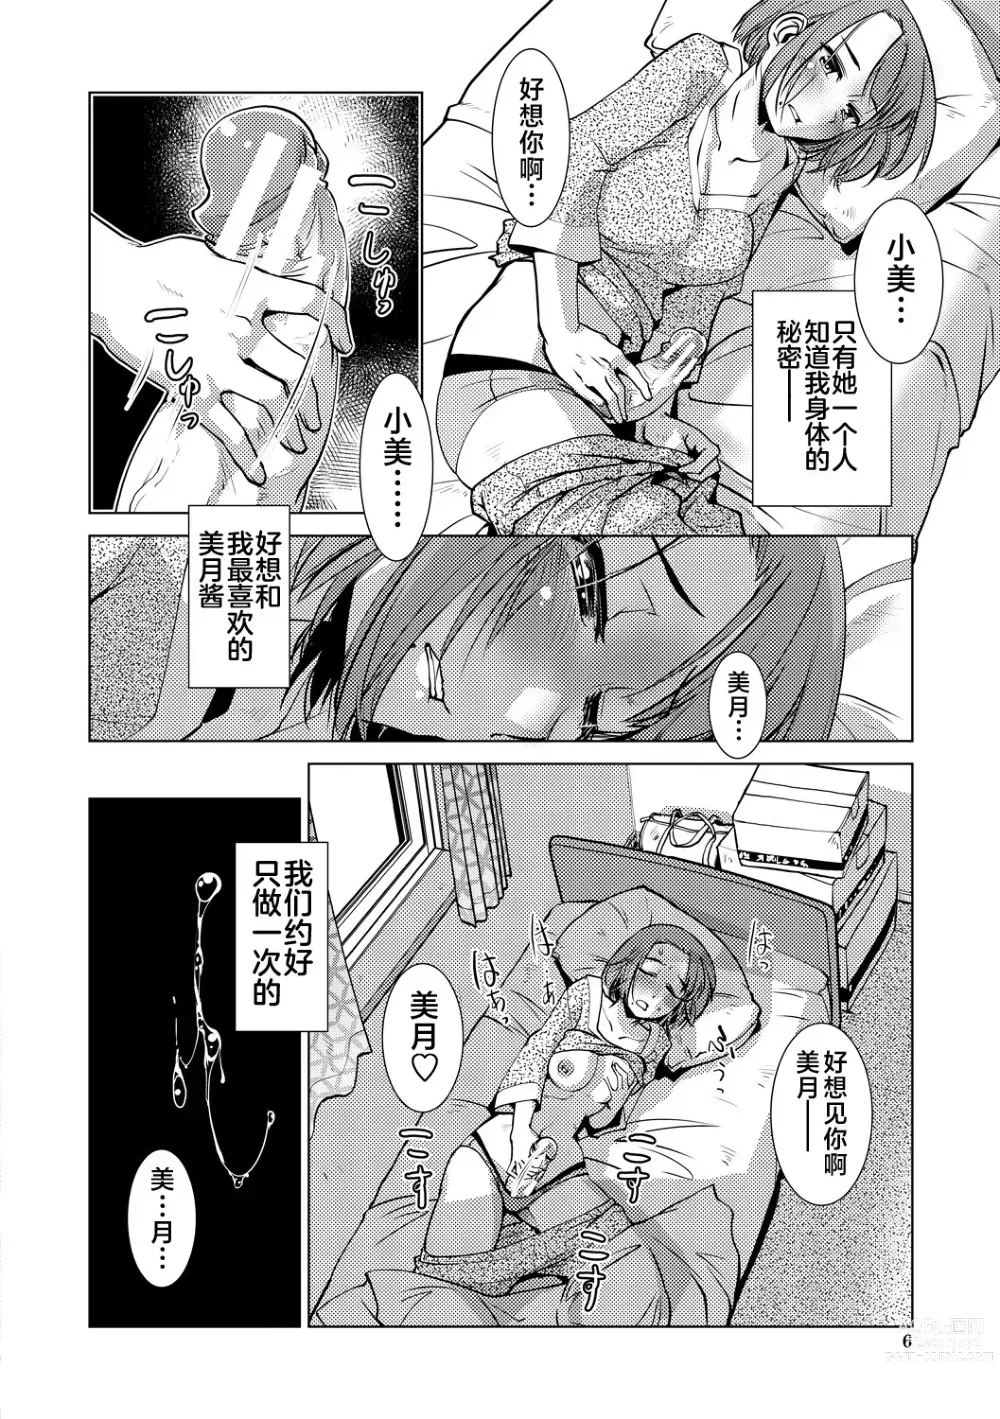 Page 6 of manga Futanari Noukou Haramase Ai